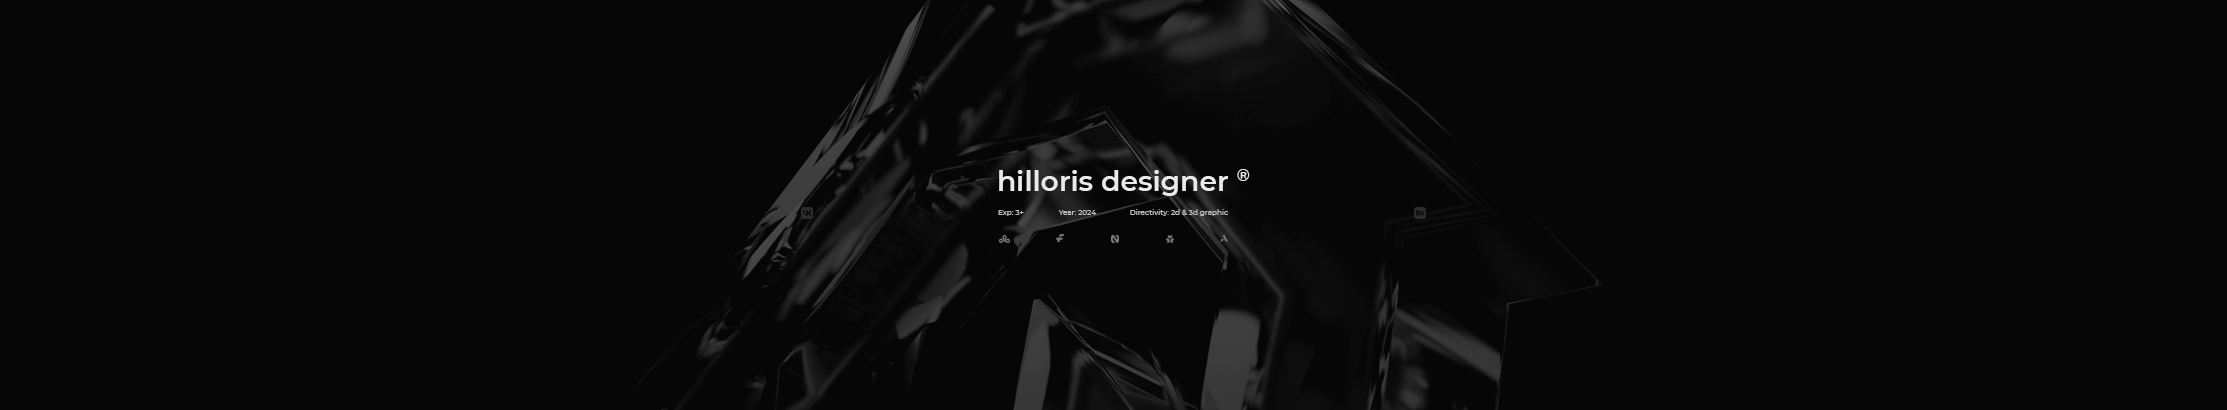 hilloris designer's profile banner